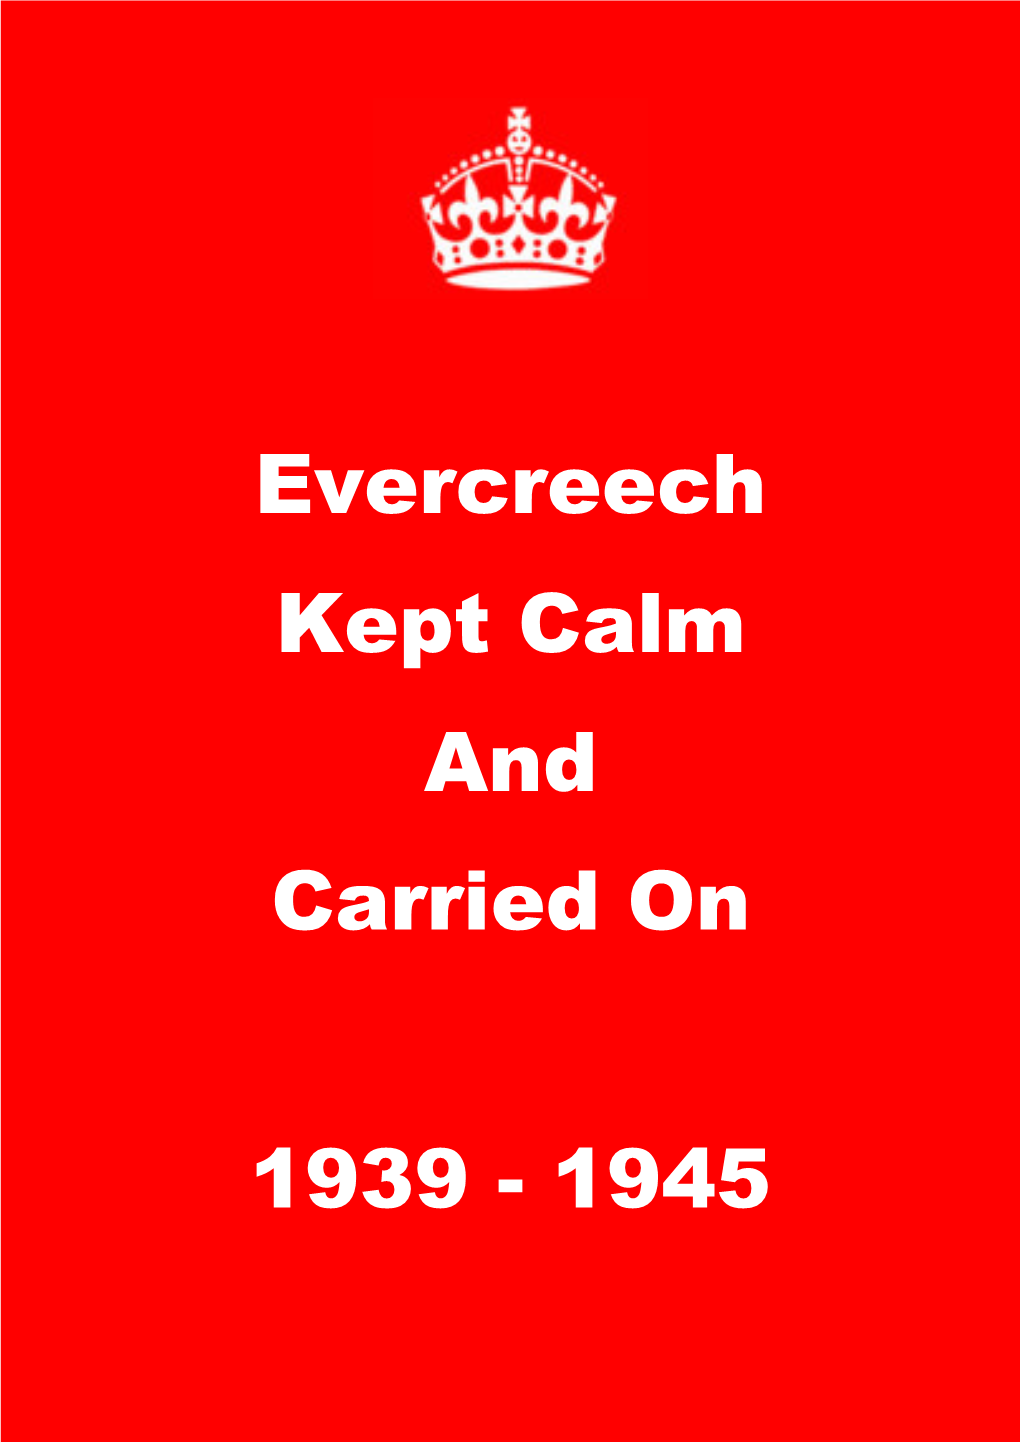 Evercreech in World War II: 1939